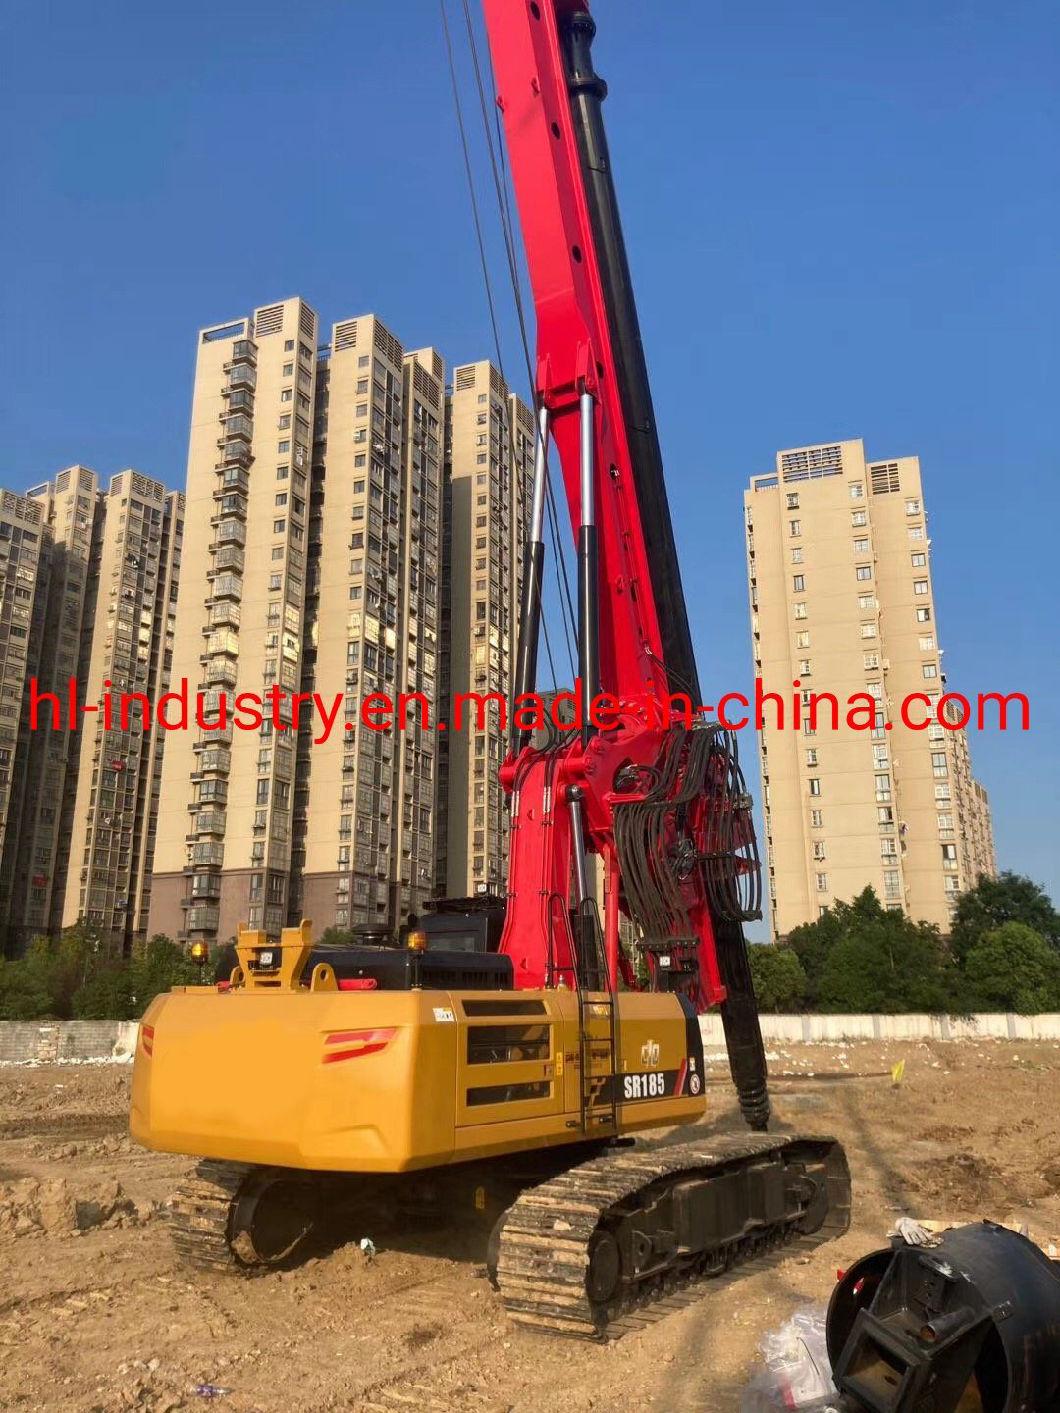 Sany/Xcmgi/Zoomlion/Yuchai/Liugong/Jintai Hydraulic Rotary Drilling Rig Machine for Foundation/Civil Engineering/Building House/Bridge/Drilling/Boring Rig